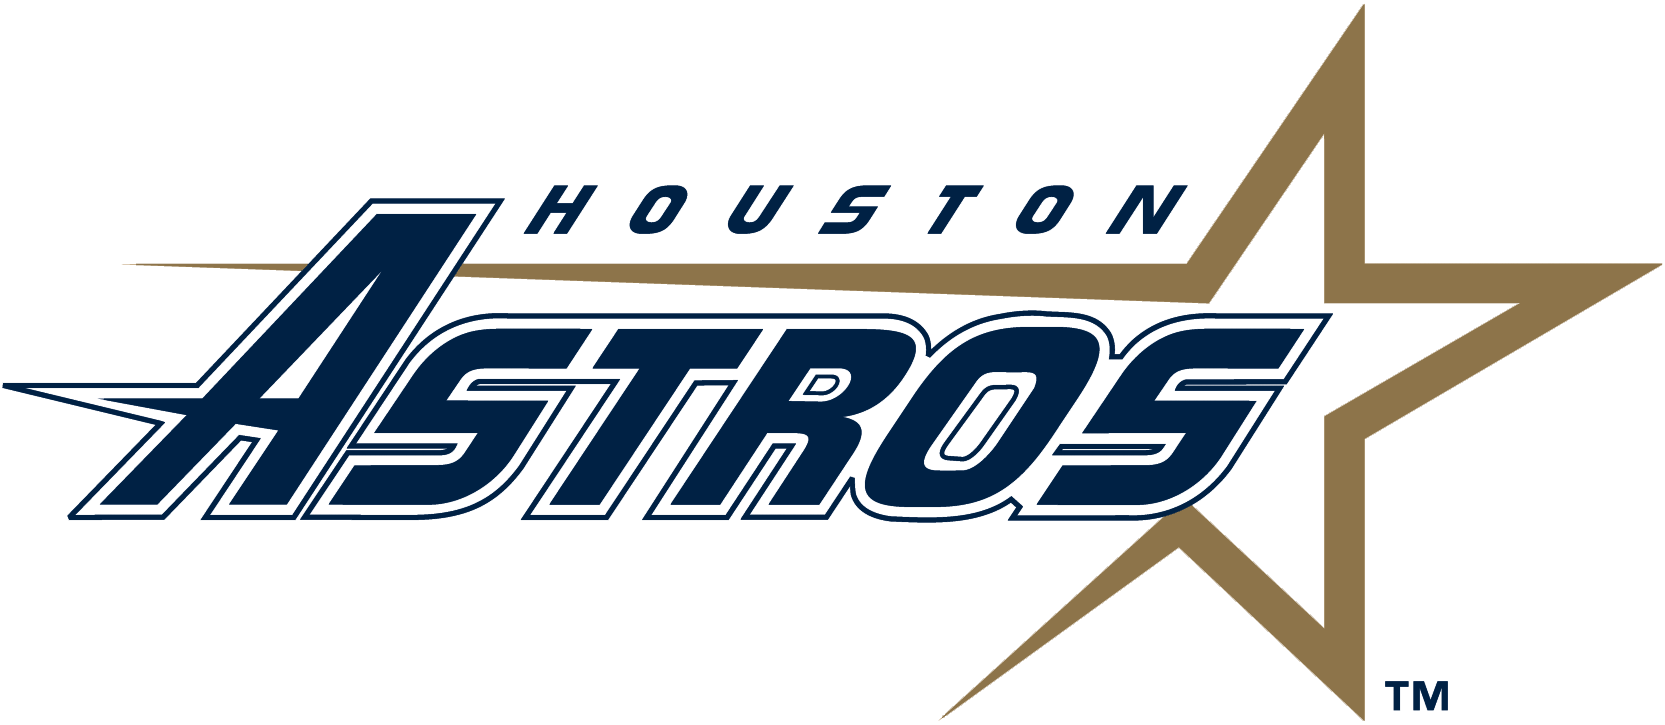 1995 Logo - Houston Astros Primary Logo - National League (NL) - Chris Creamer's ...